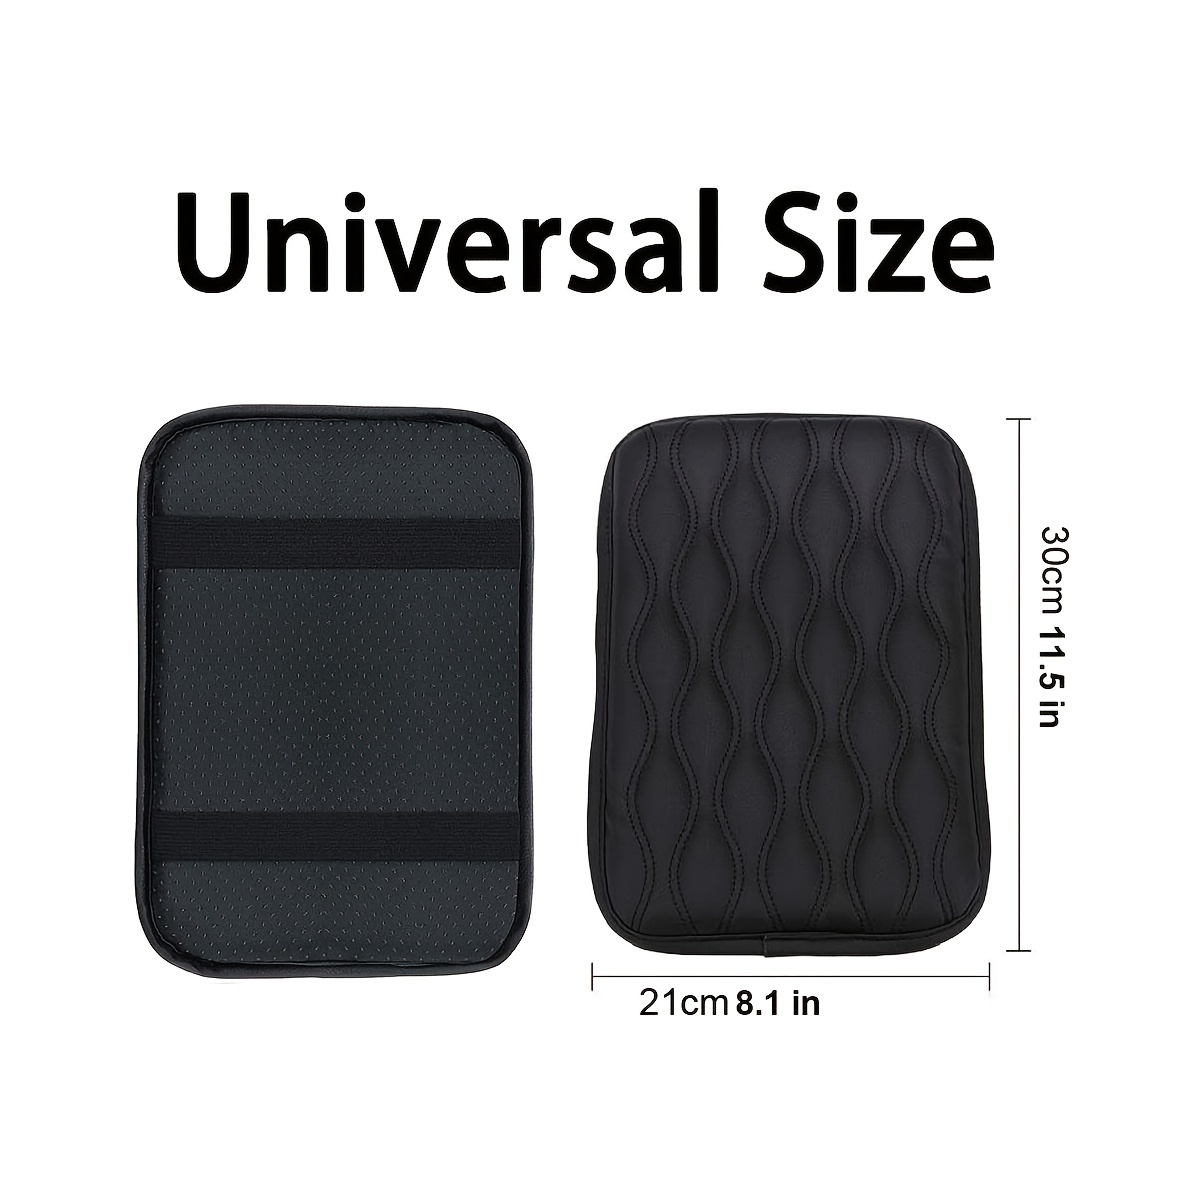 Car Armrest Box Height Pad Universal Leather Armrest Cushion with